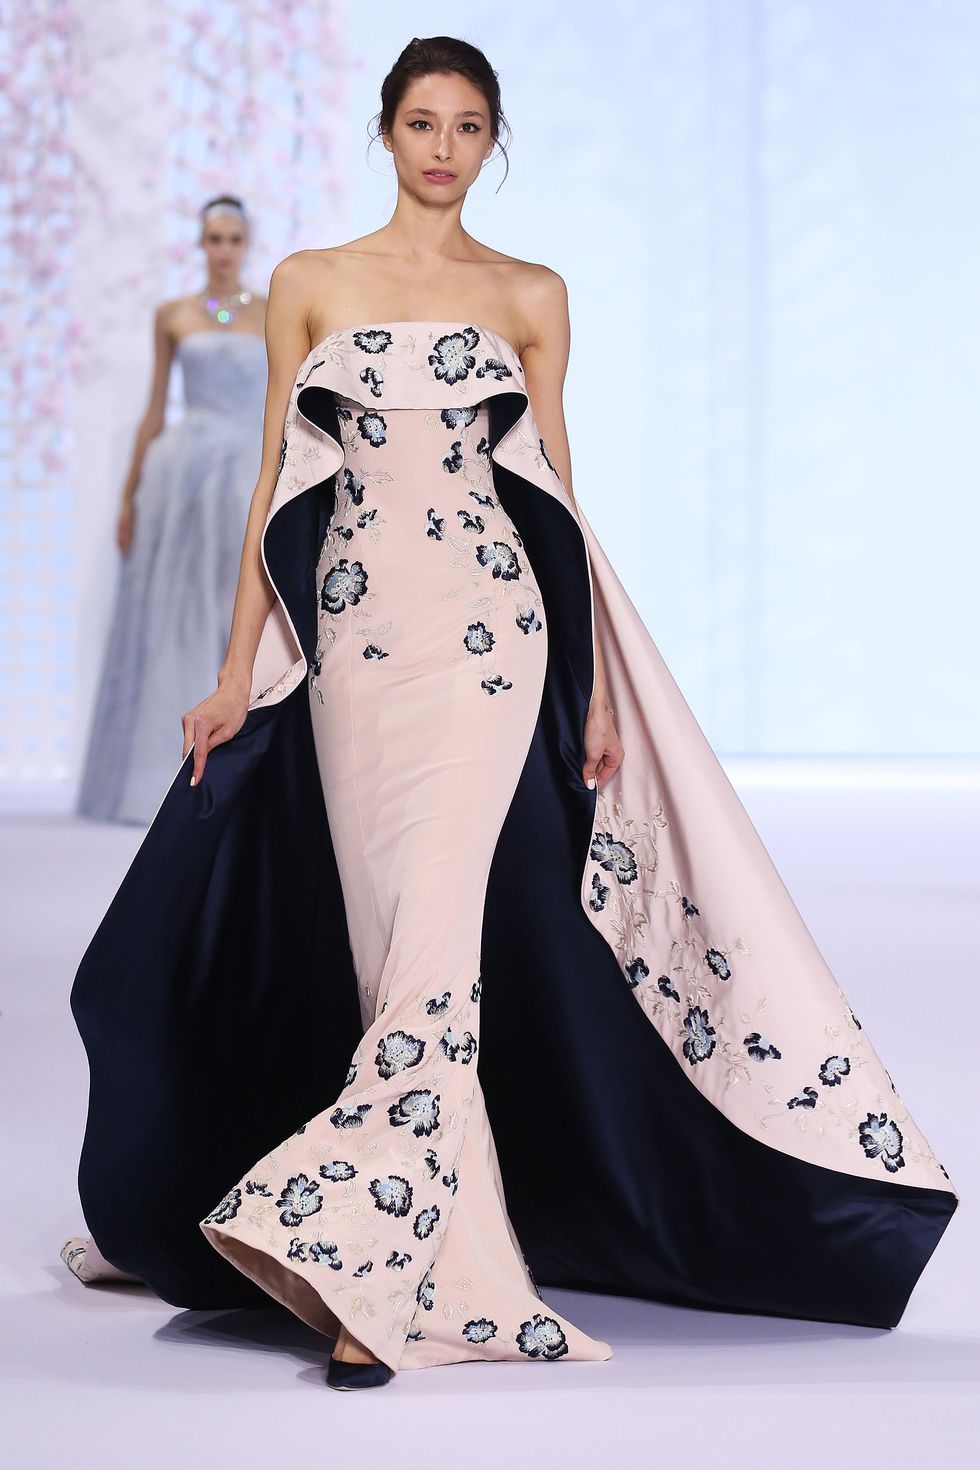 Couture Oscars dress inspiration